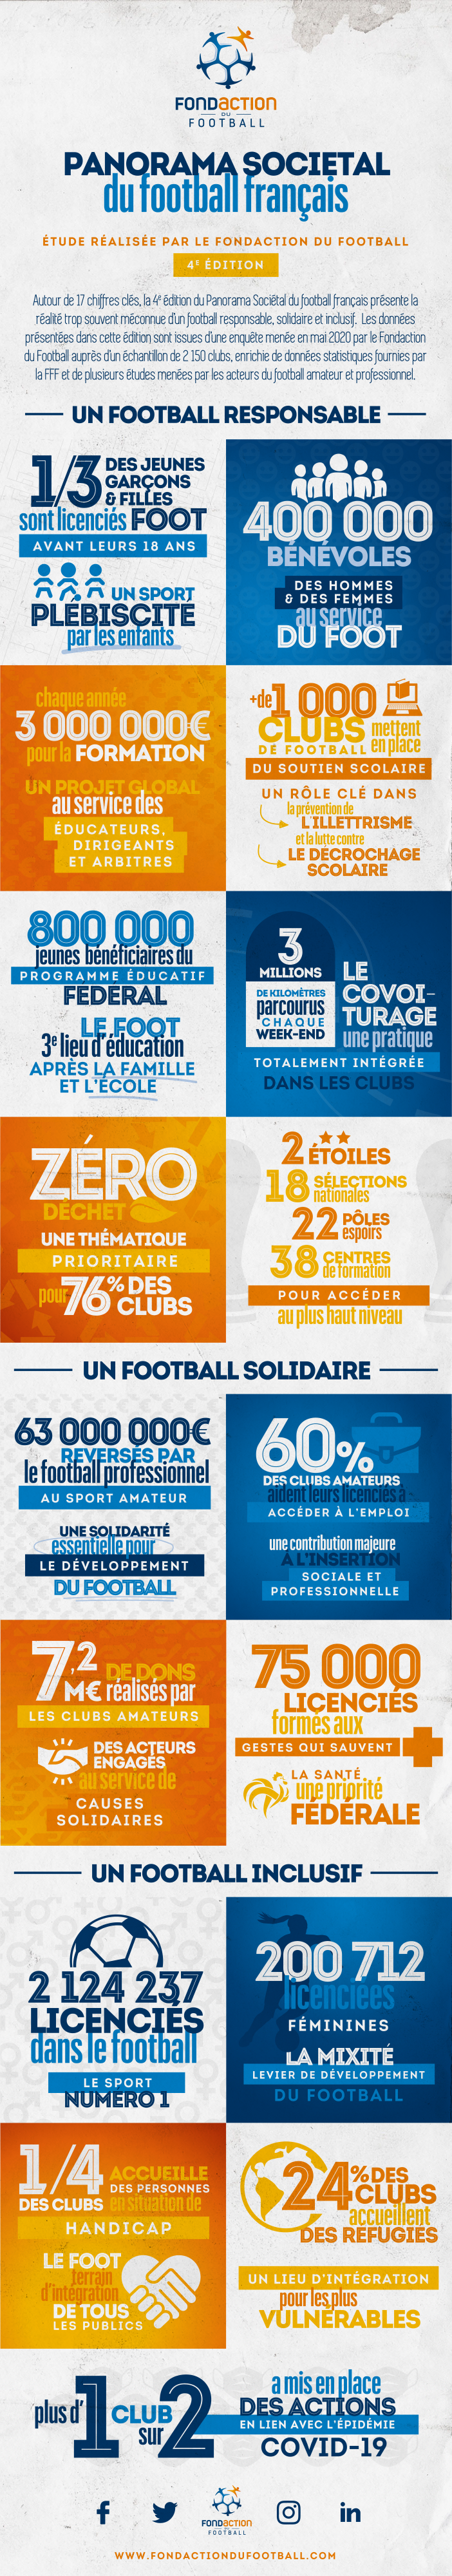 Fondaction du Football Ecolosport